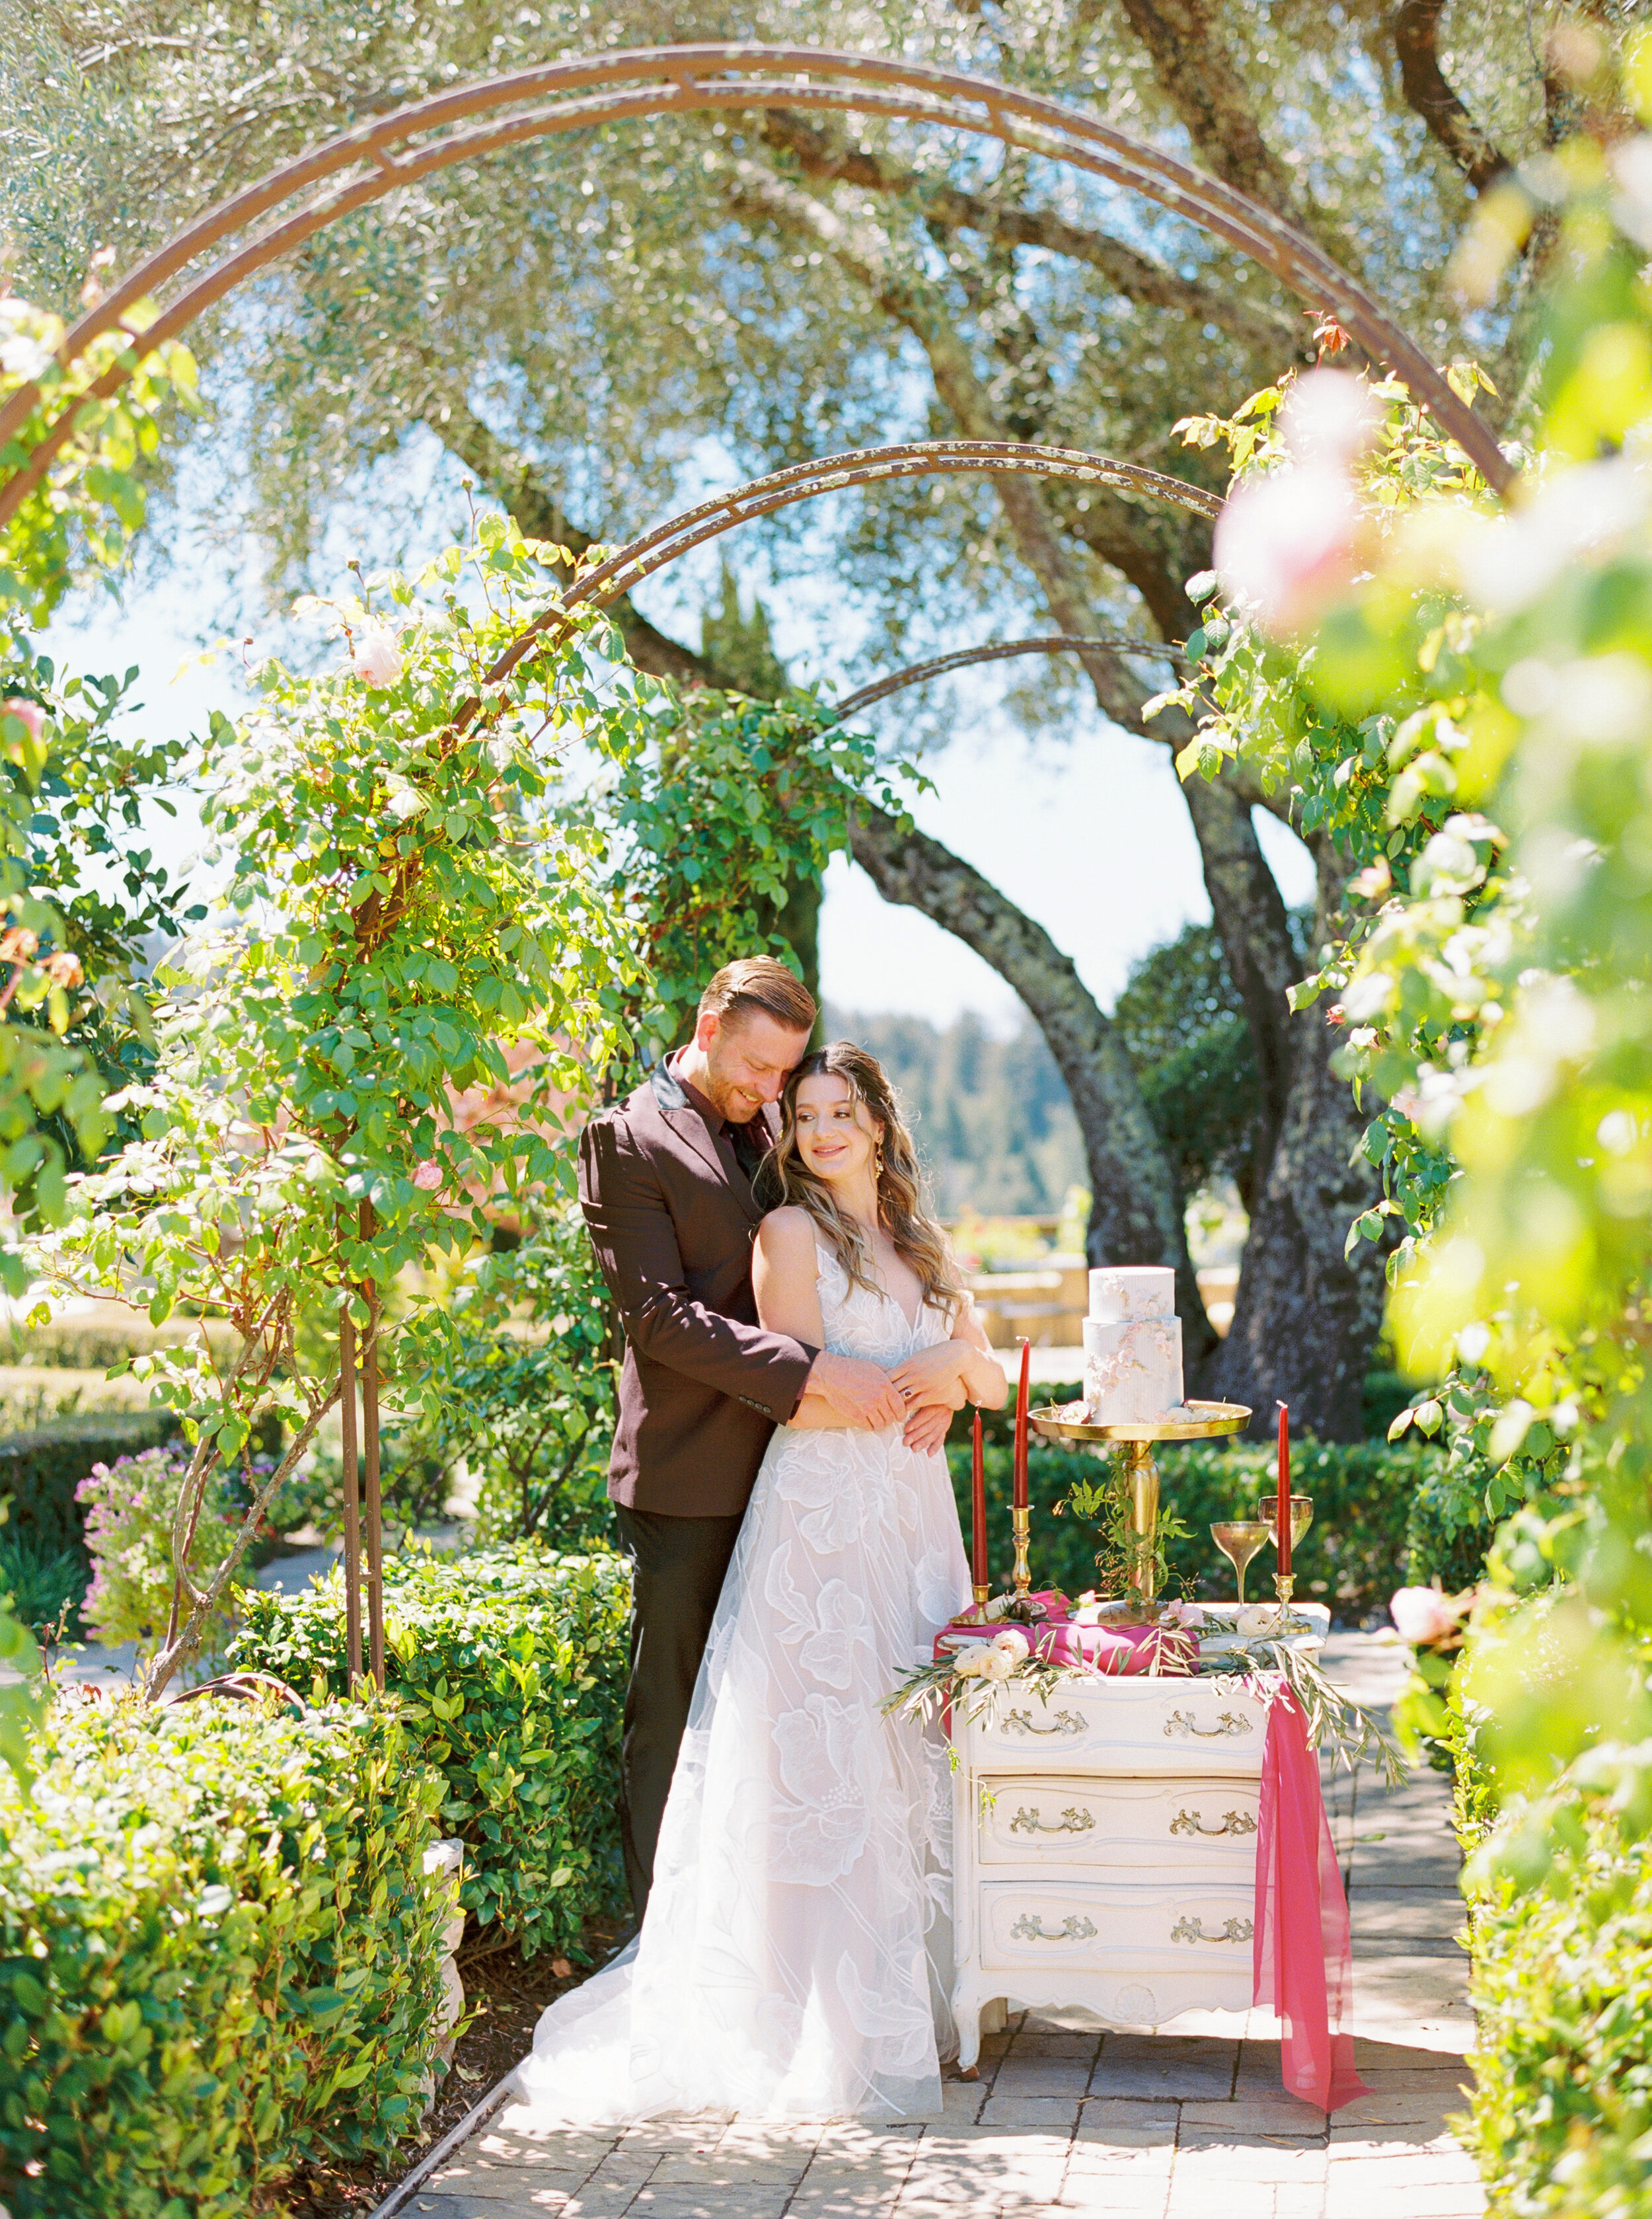 Regale Winery and Vineyards Wedding - Sarahi Hadden Photography-408.jpg